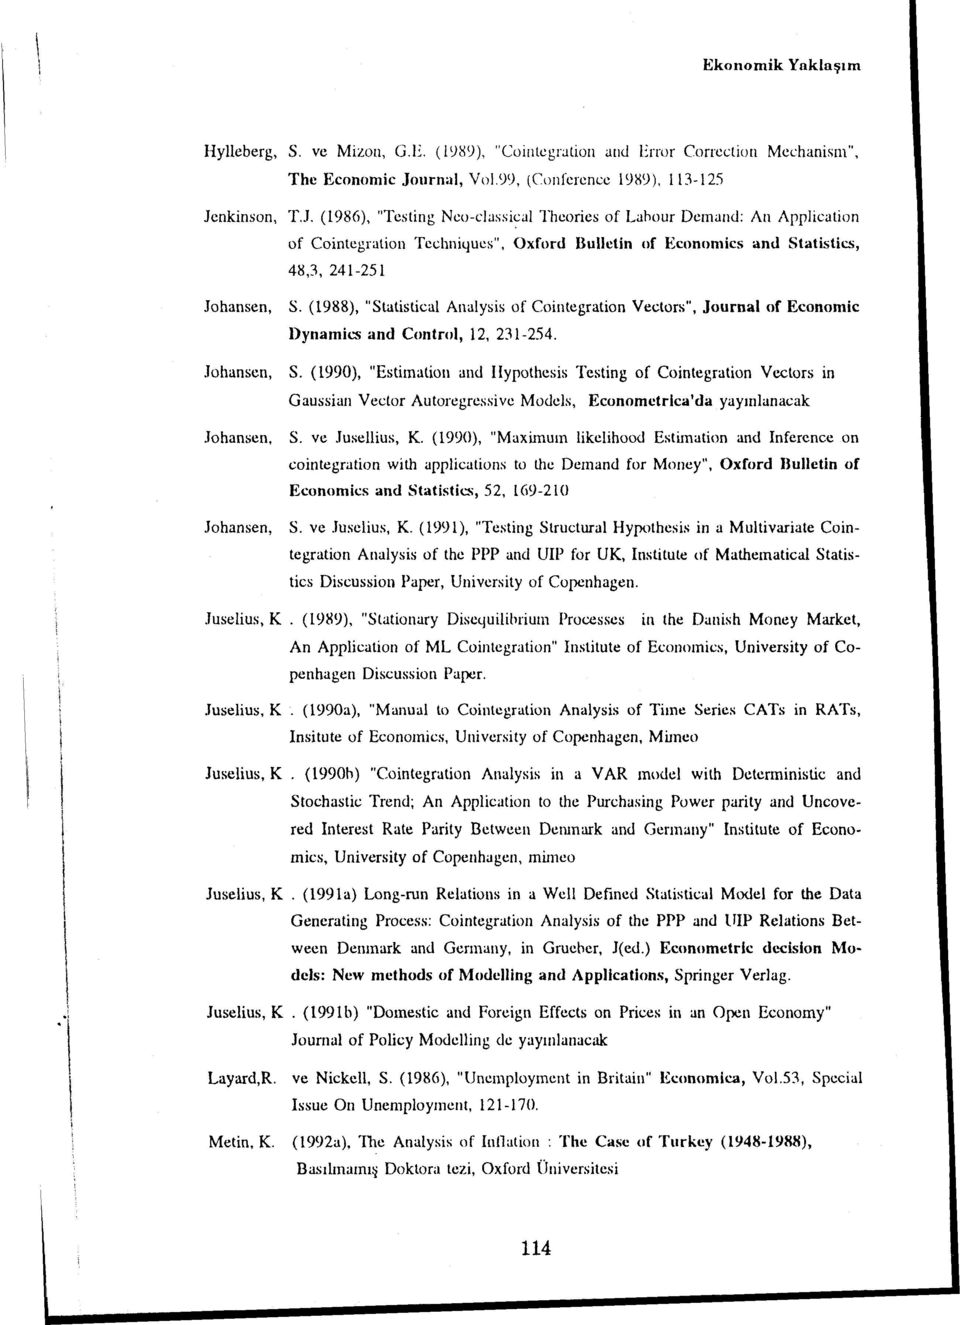 urnal, Vnl.9J, (Cufcrcncc ln9), 3-25 Jcnkinson, T..J. (986), "Tcsting Nco-classi~al Thcorics of Lahour Dcnand: An Application of Cointcgration Tcdmiqucs", Oxford Bu Iletin of Econnmics and Statistics, 48,3, 24-25 Johansen, Johansen, S.